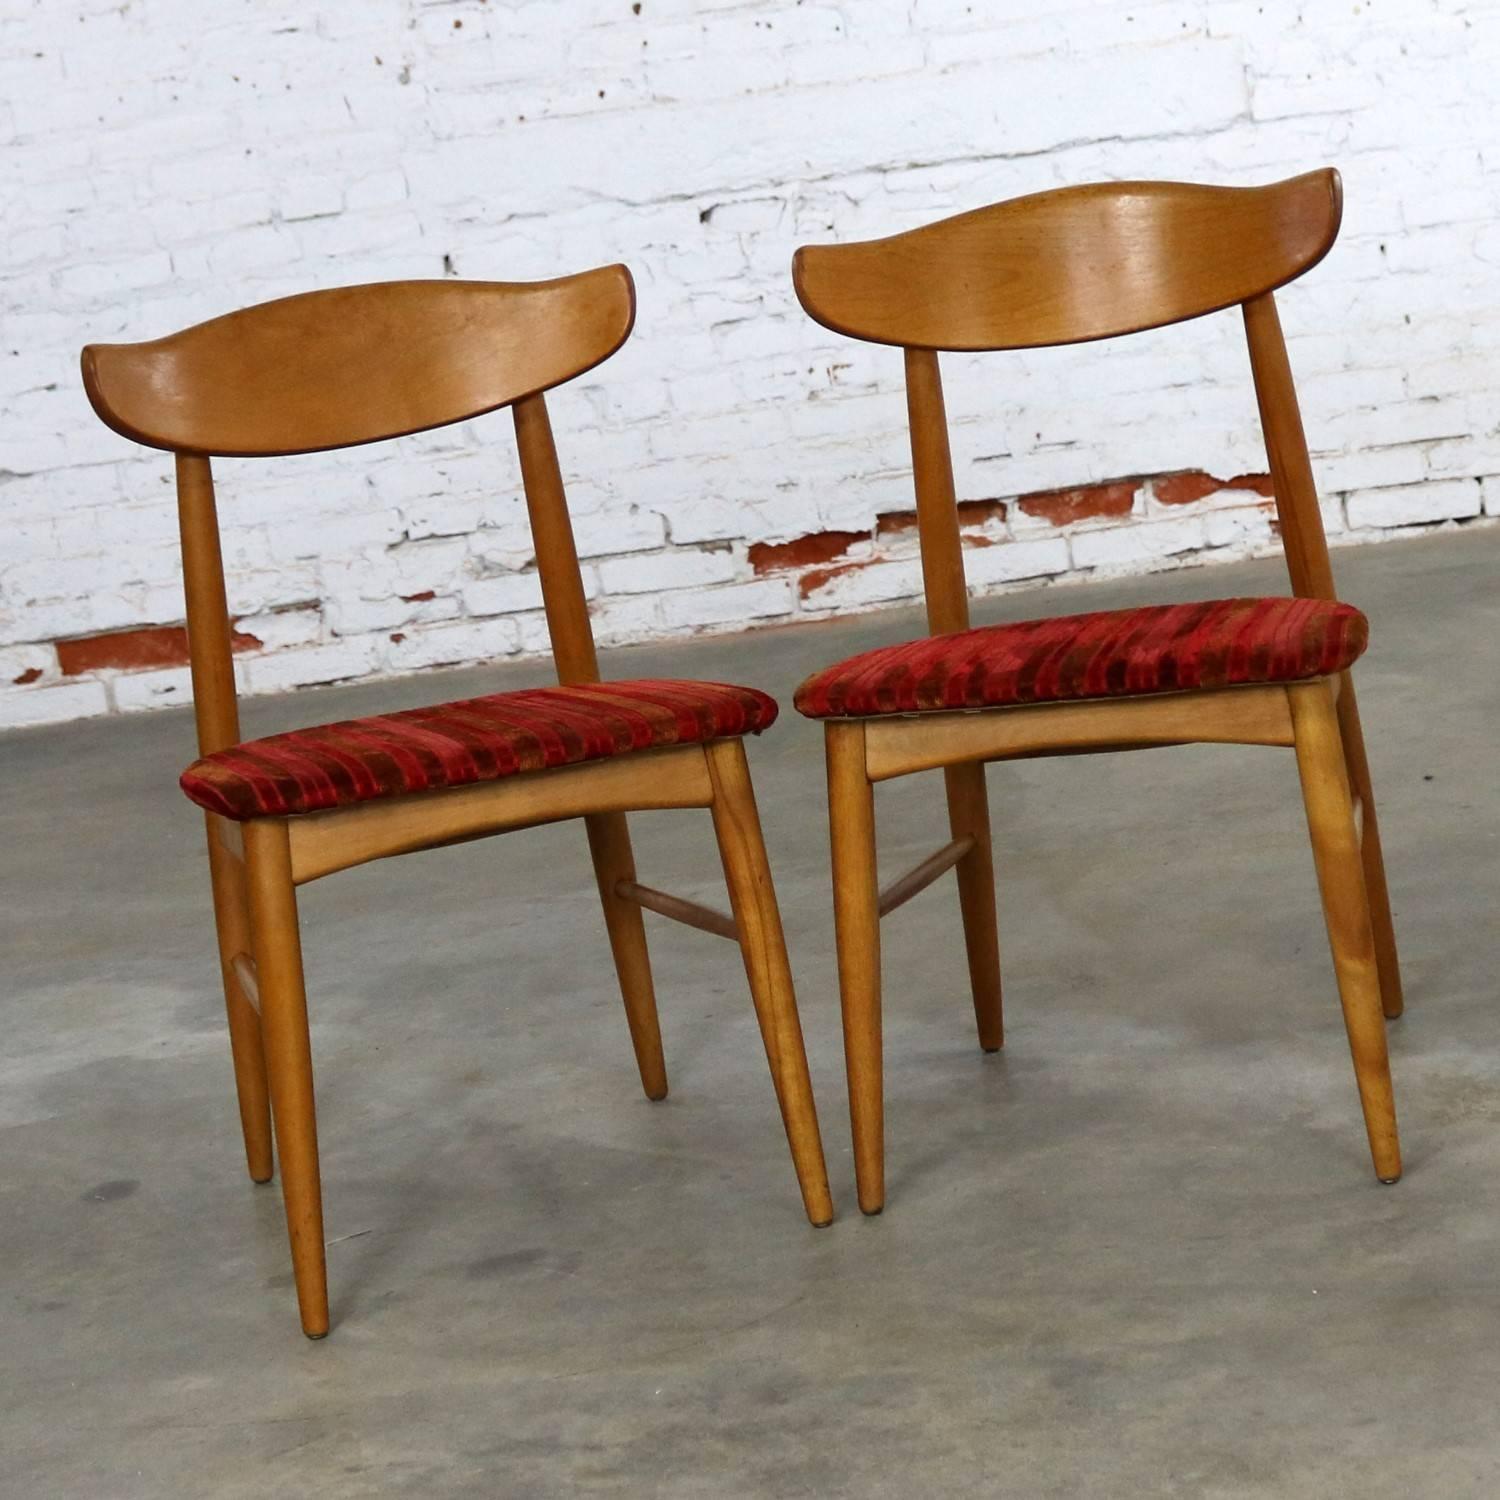 Pair of Mid-Century Modern Birchcraft Danish Style Side Chairs by Baumritter 1